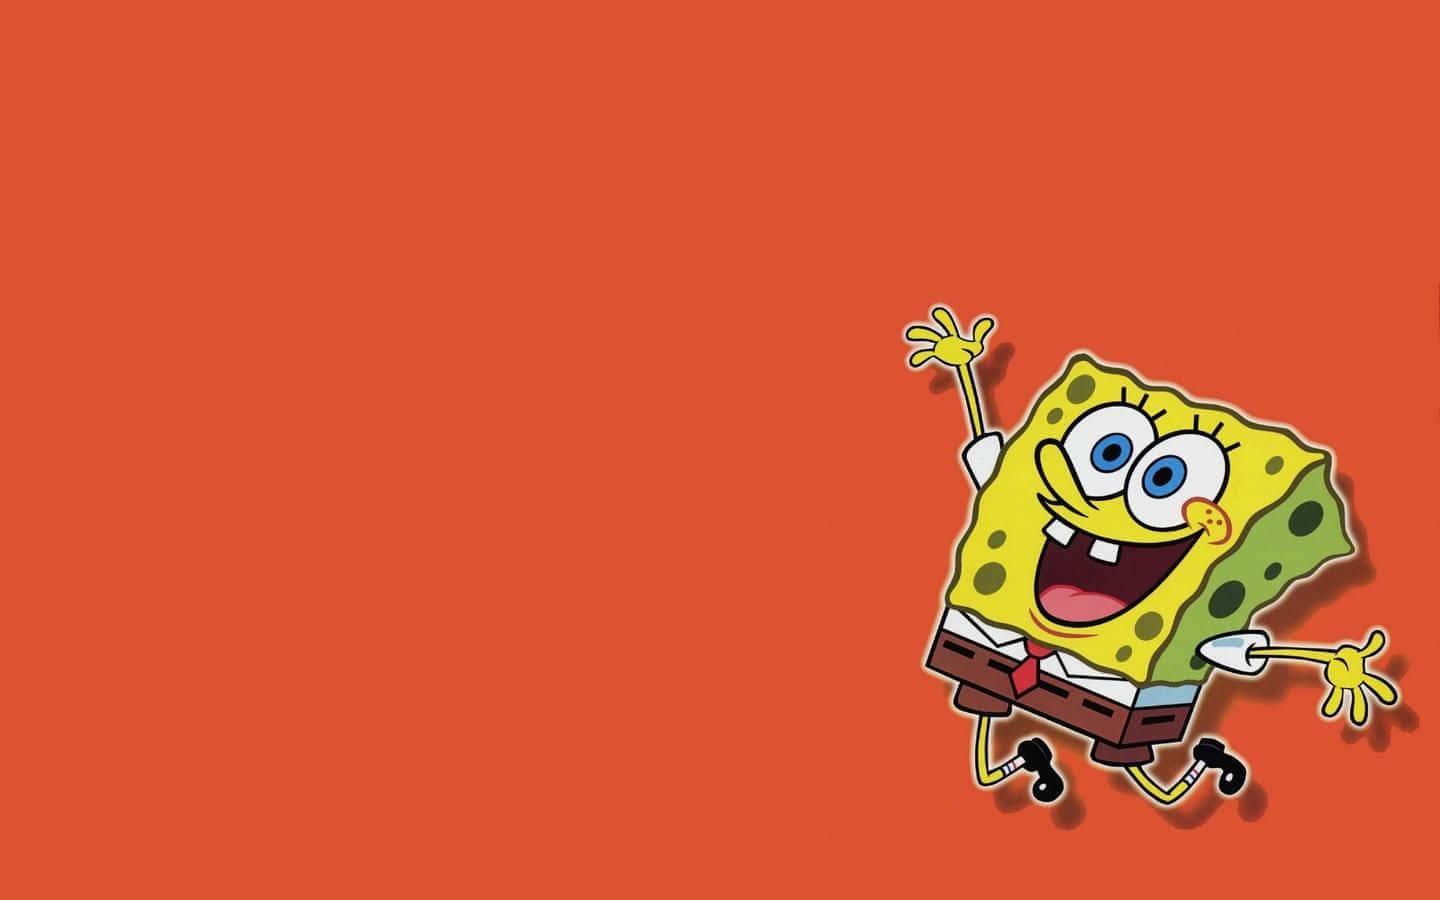 Aesthetic Spongebob boosts creativity and vibrancy